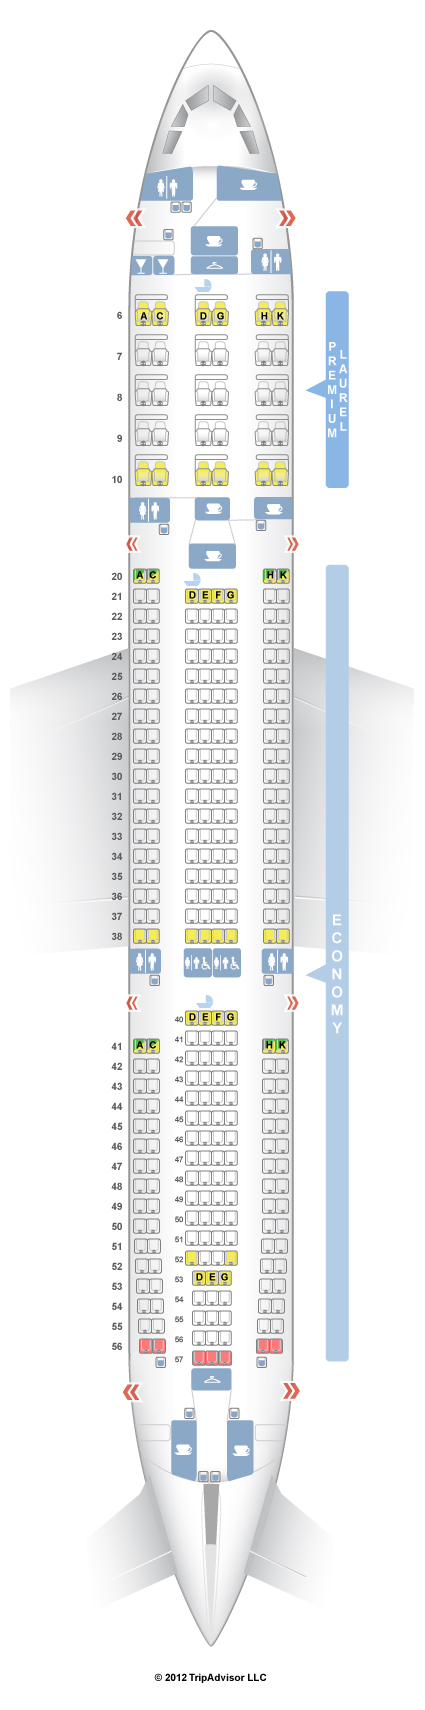 Seatguru Seat Map Eva Air Airbus A330 300 333